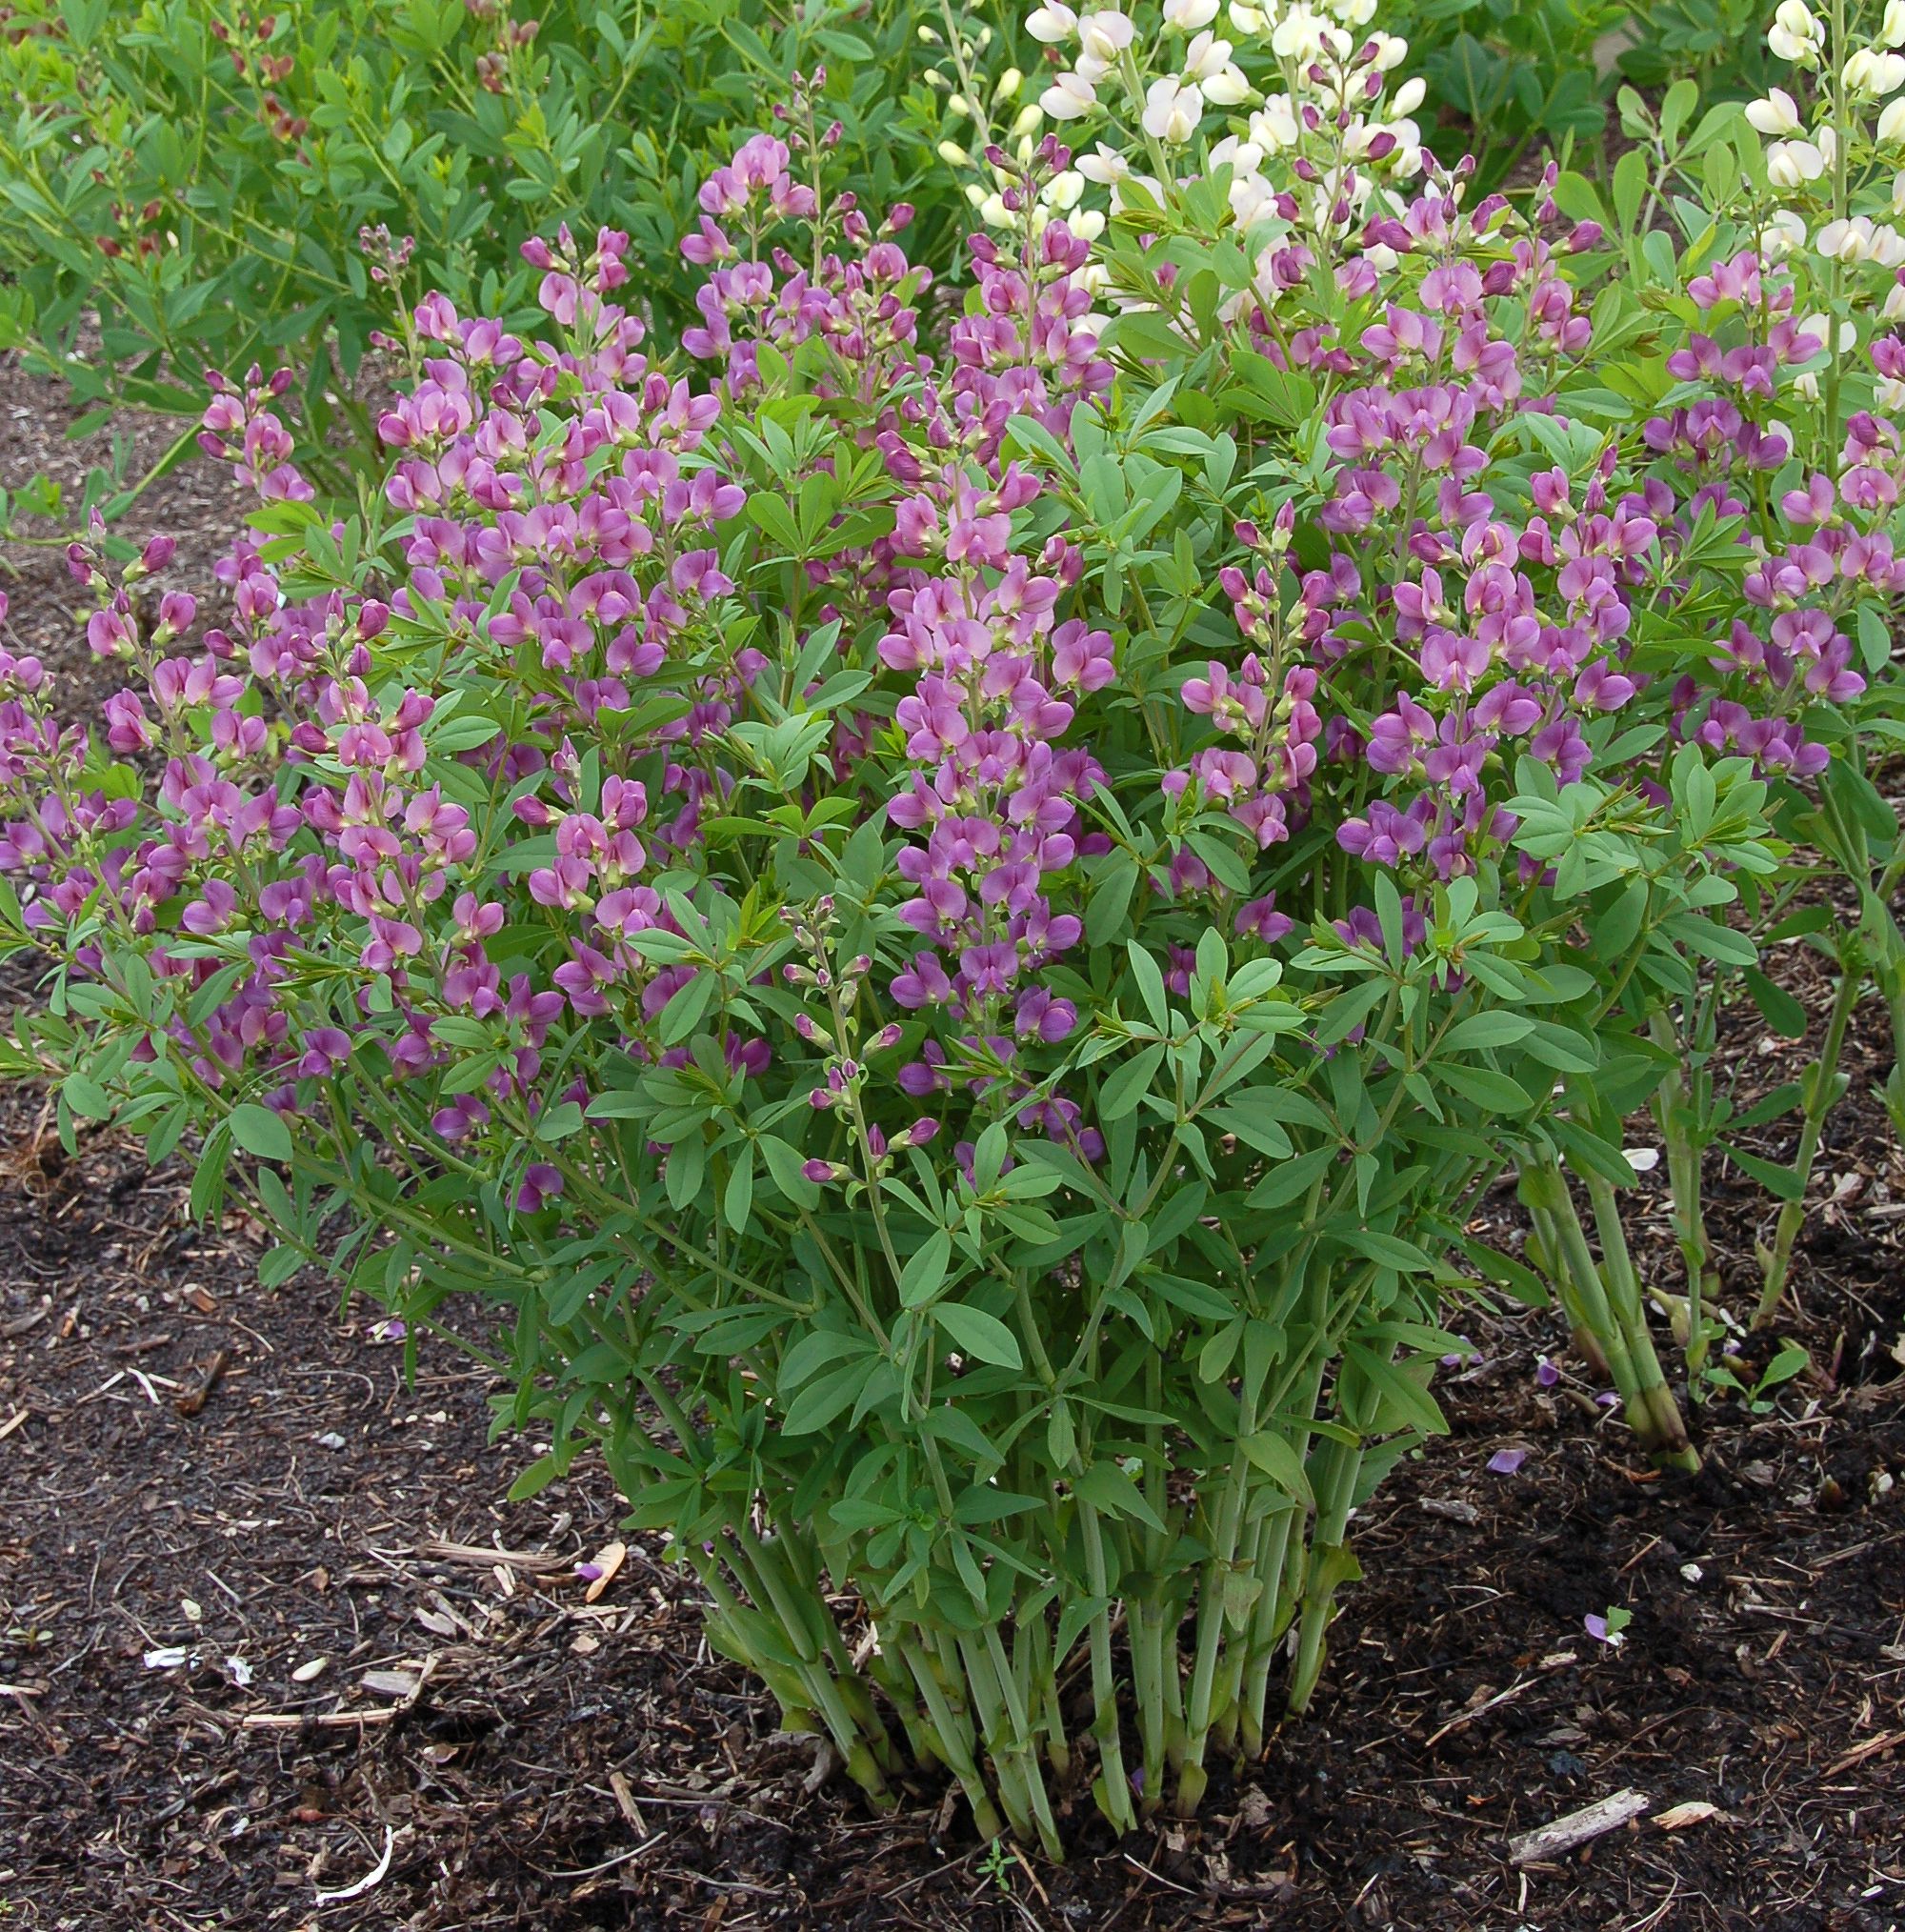 images/plants/baptisia/bap-lavendar-rose/bap-lavendar-rose-0008.jpg